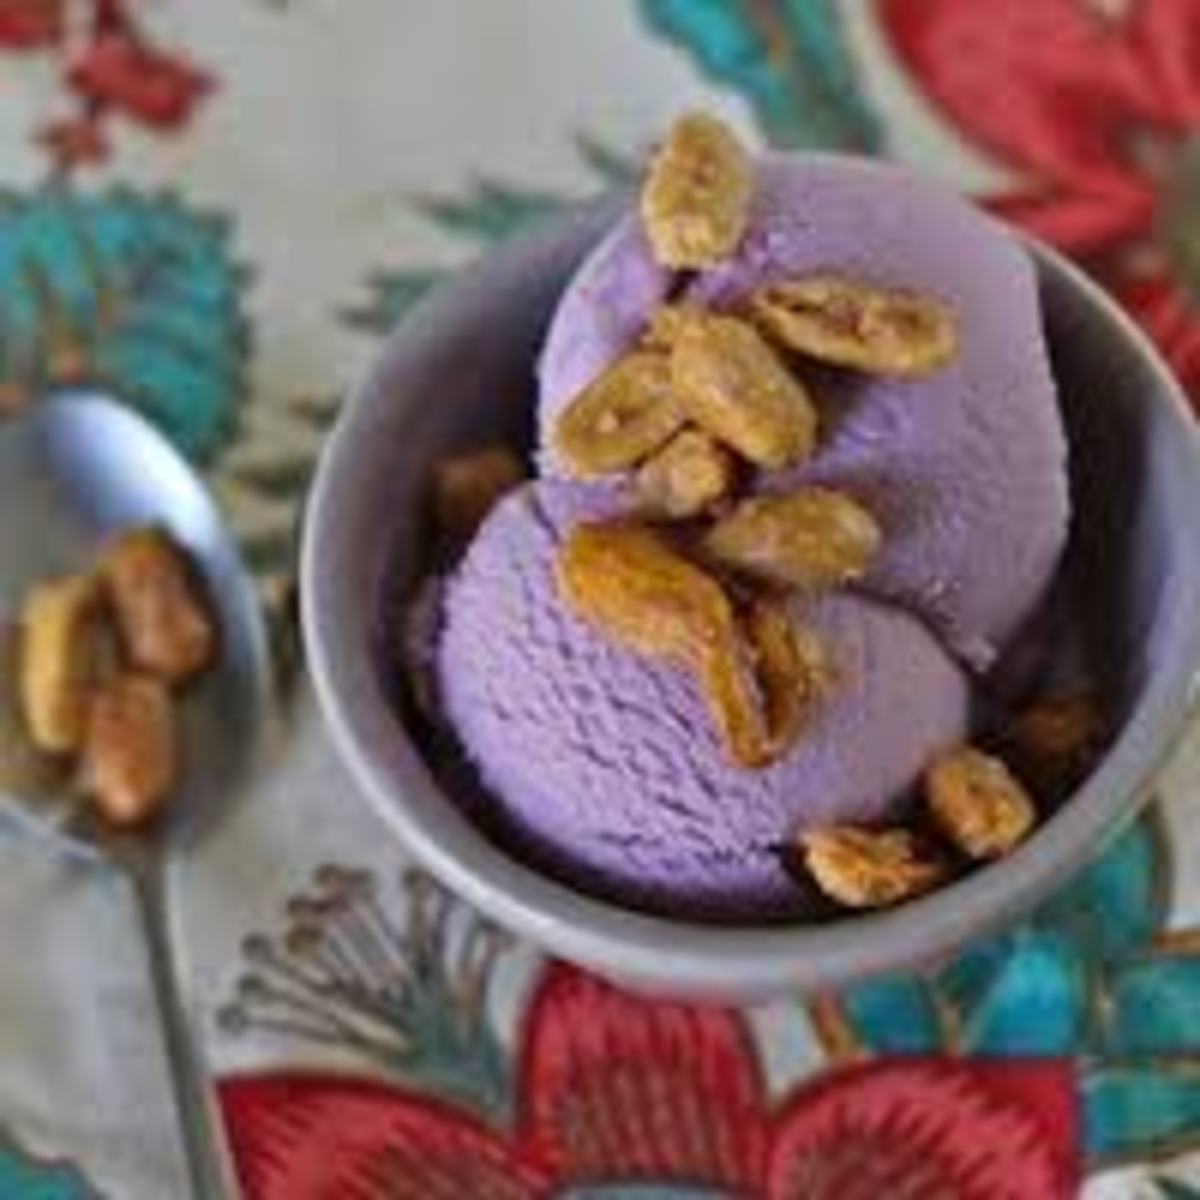 Purple Yam Ice cream